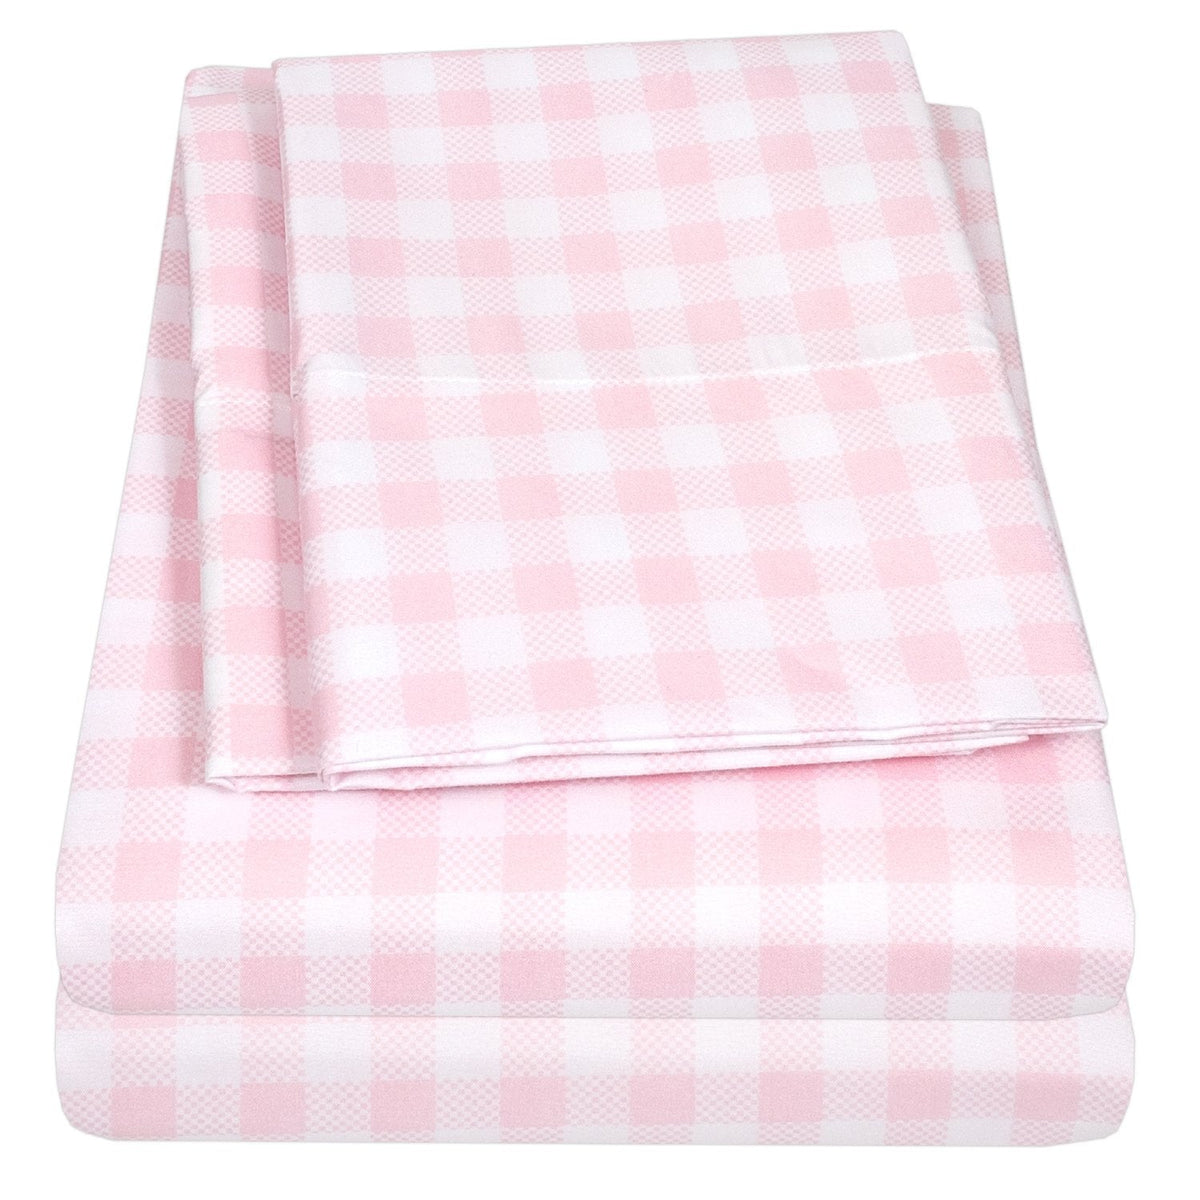 Printed Kids Bed Sheet Set (Pink Gingham) - Folded